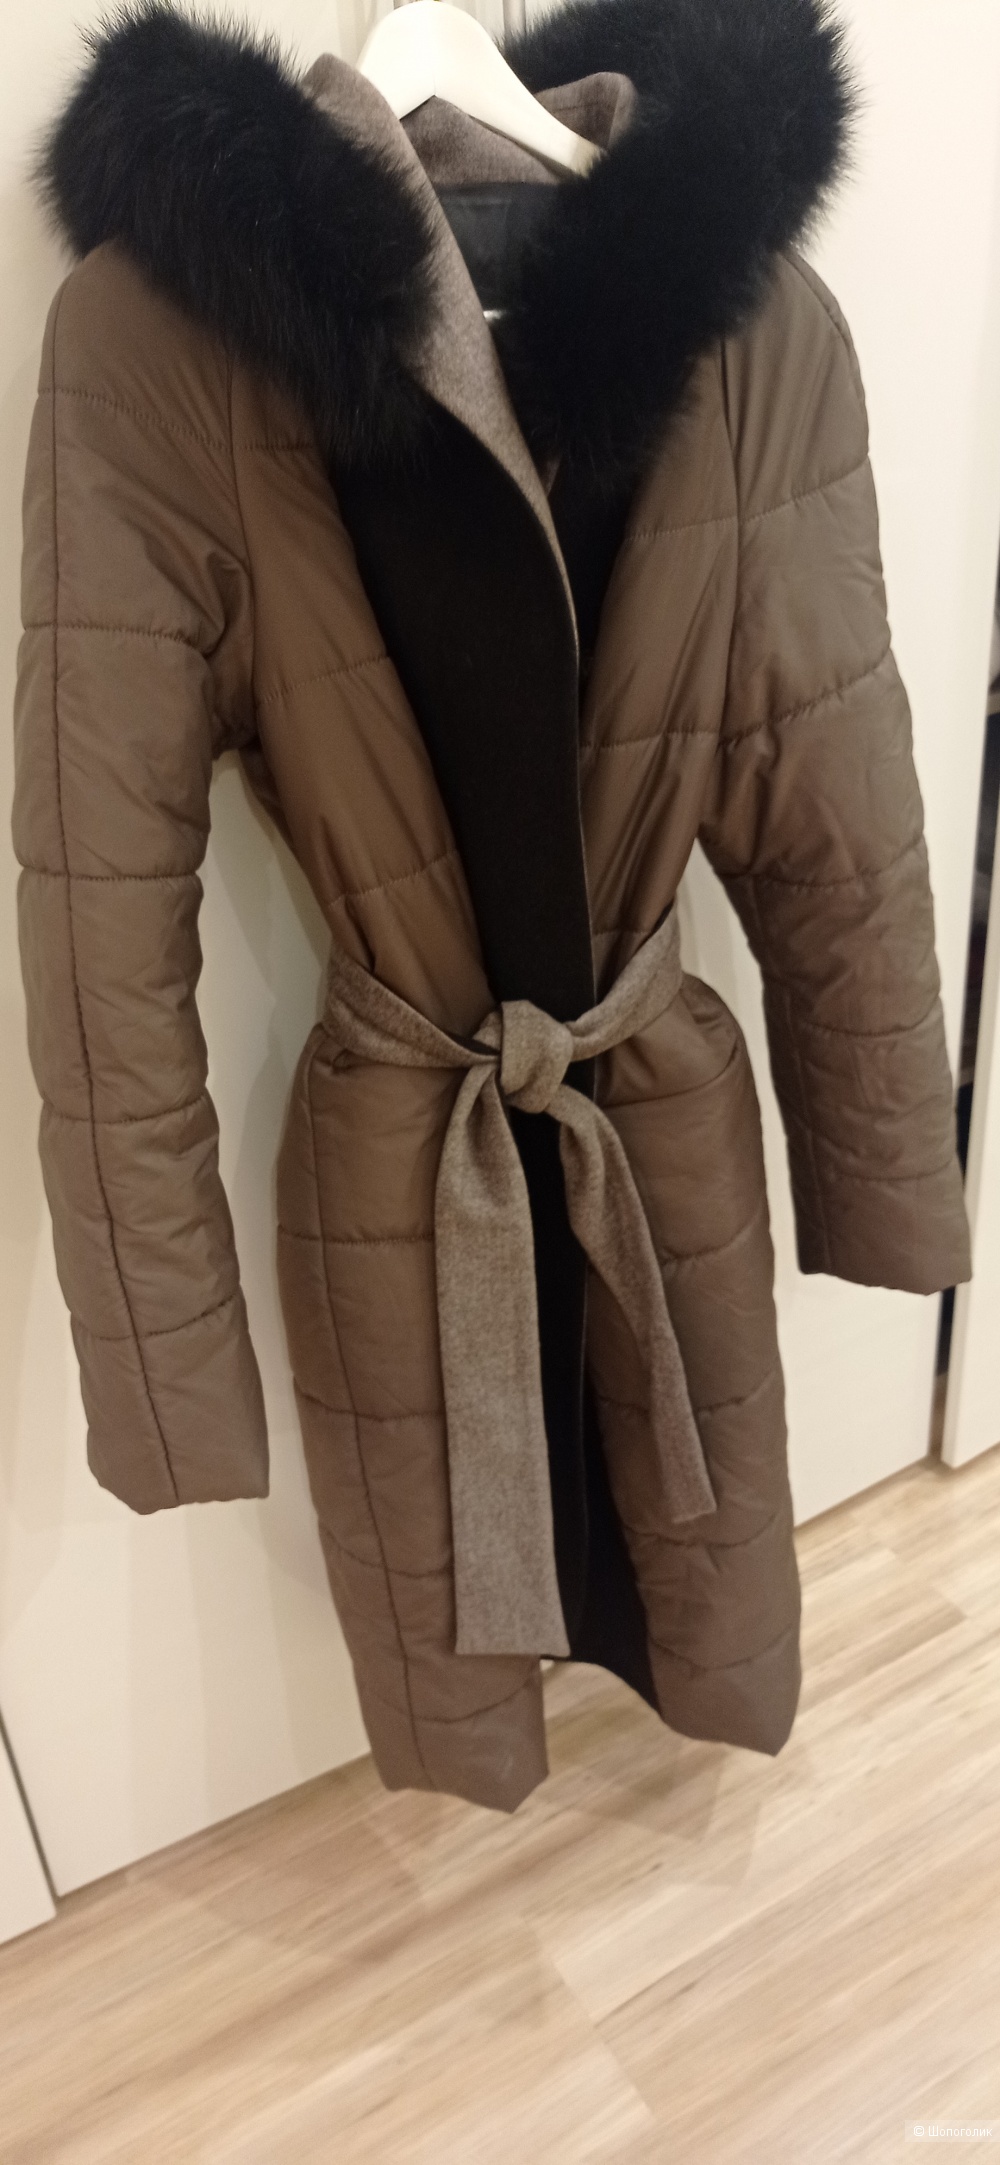 Пуховик пальто Турция размер М-L